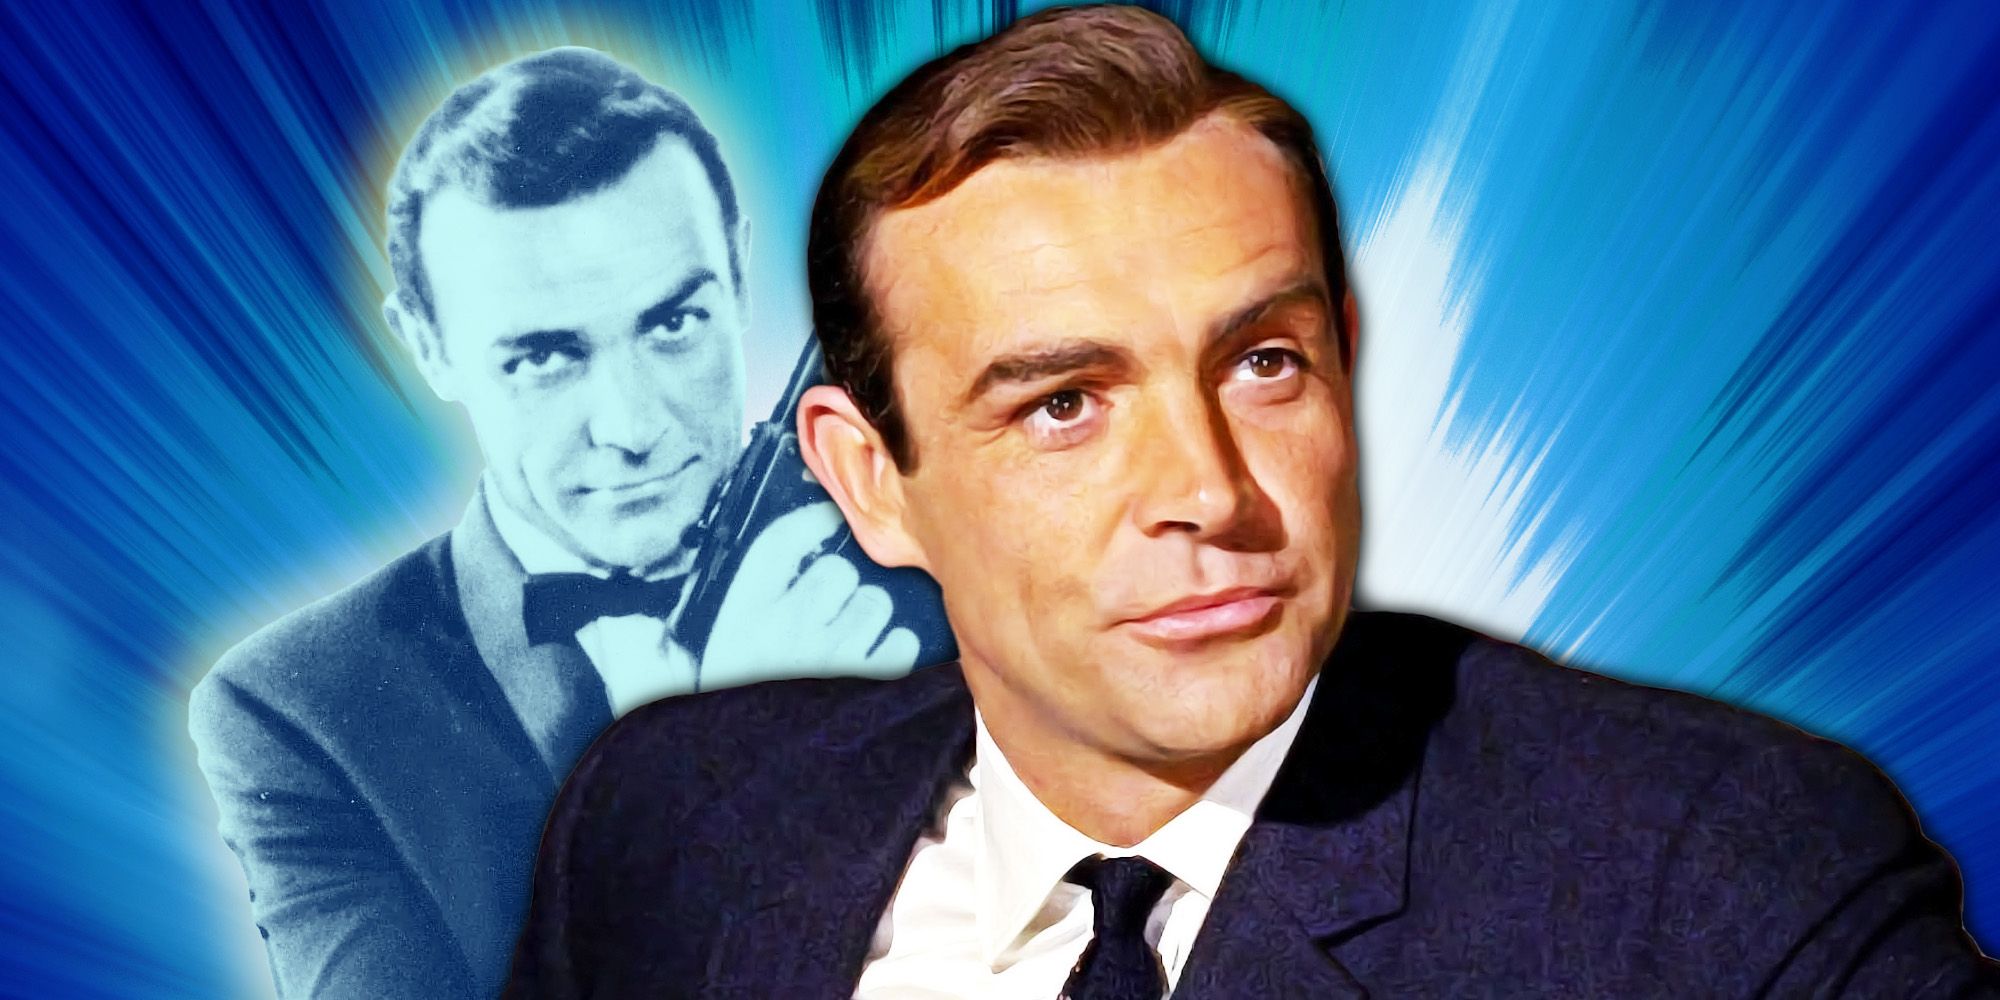 A custom image of Sean Connery as James Bond